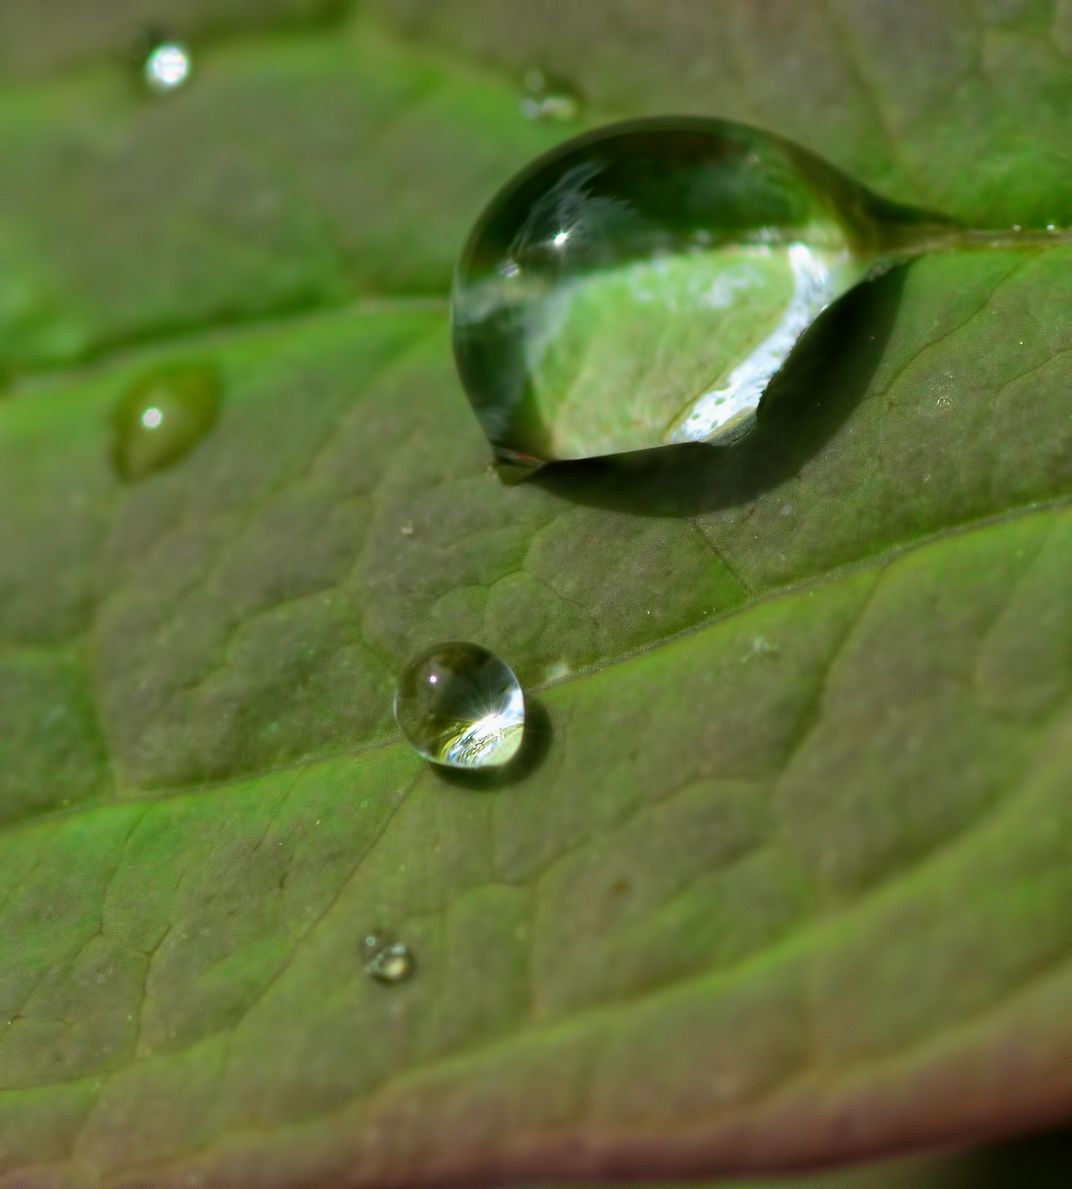 Rain drops on a leaf form tiny lenses focusing on the world ...